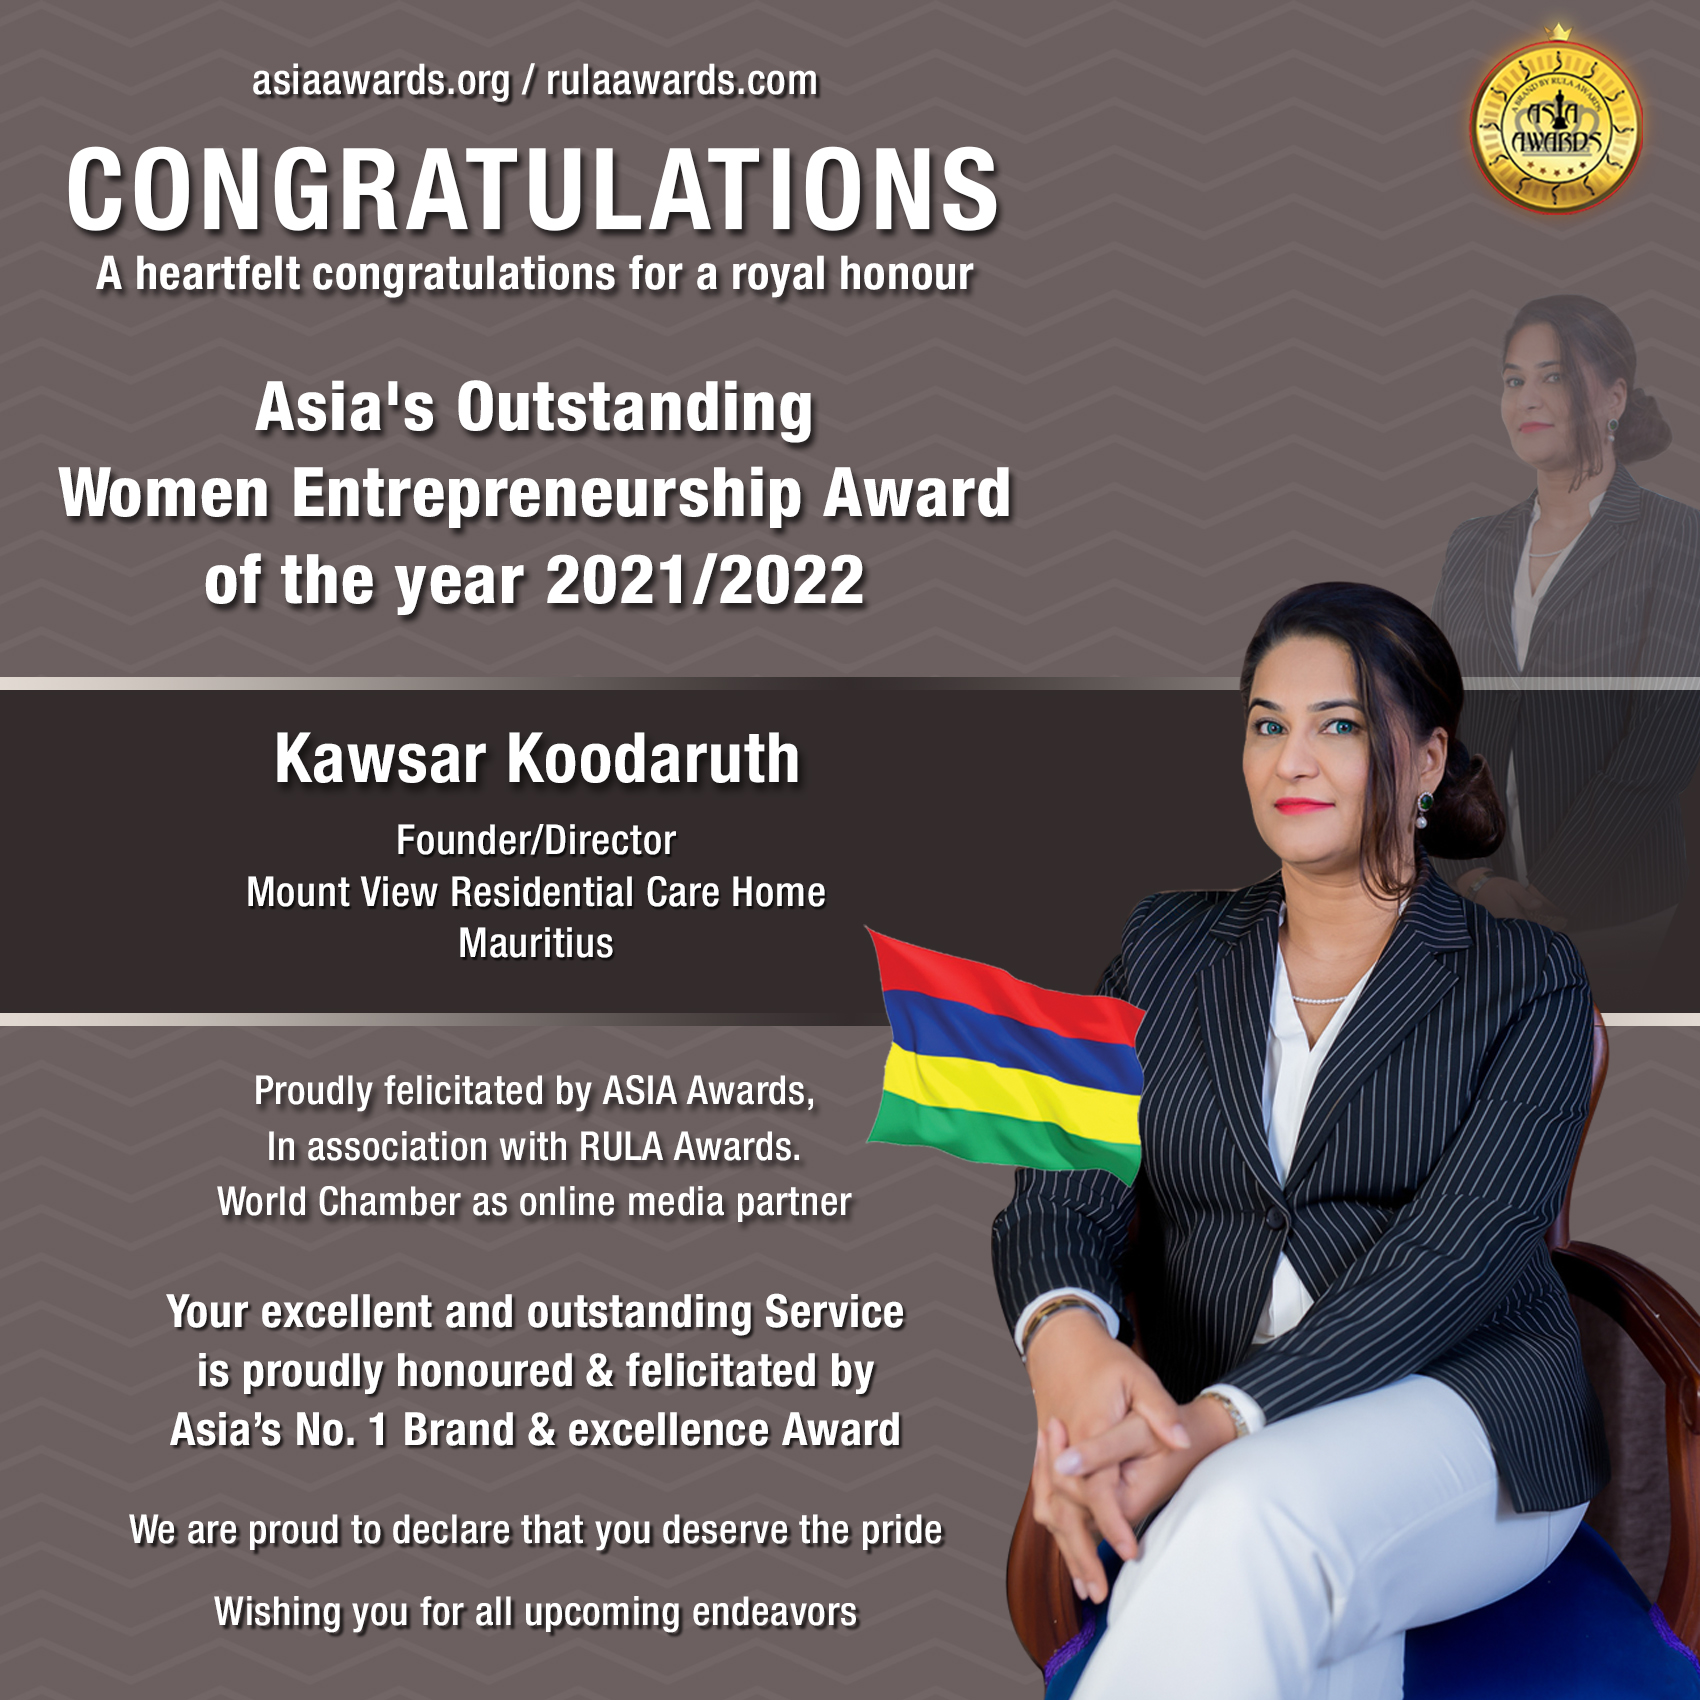 Kawsar Koodaruth has bagged Asia's Outstanding Women Entrepreneurship Award